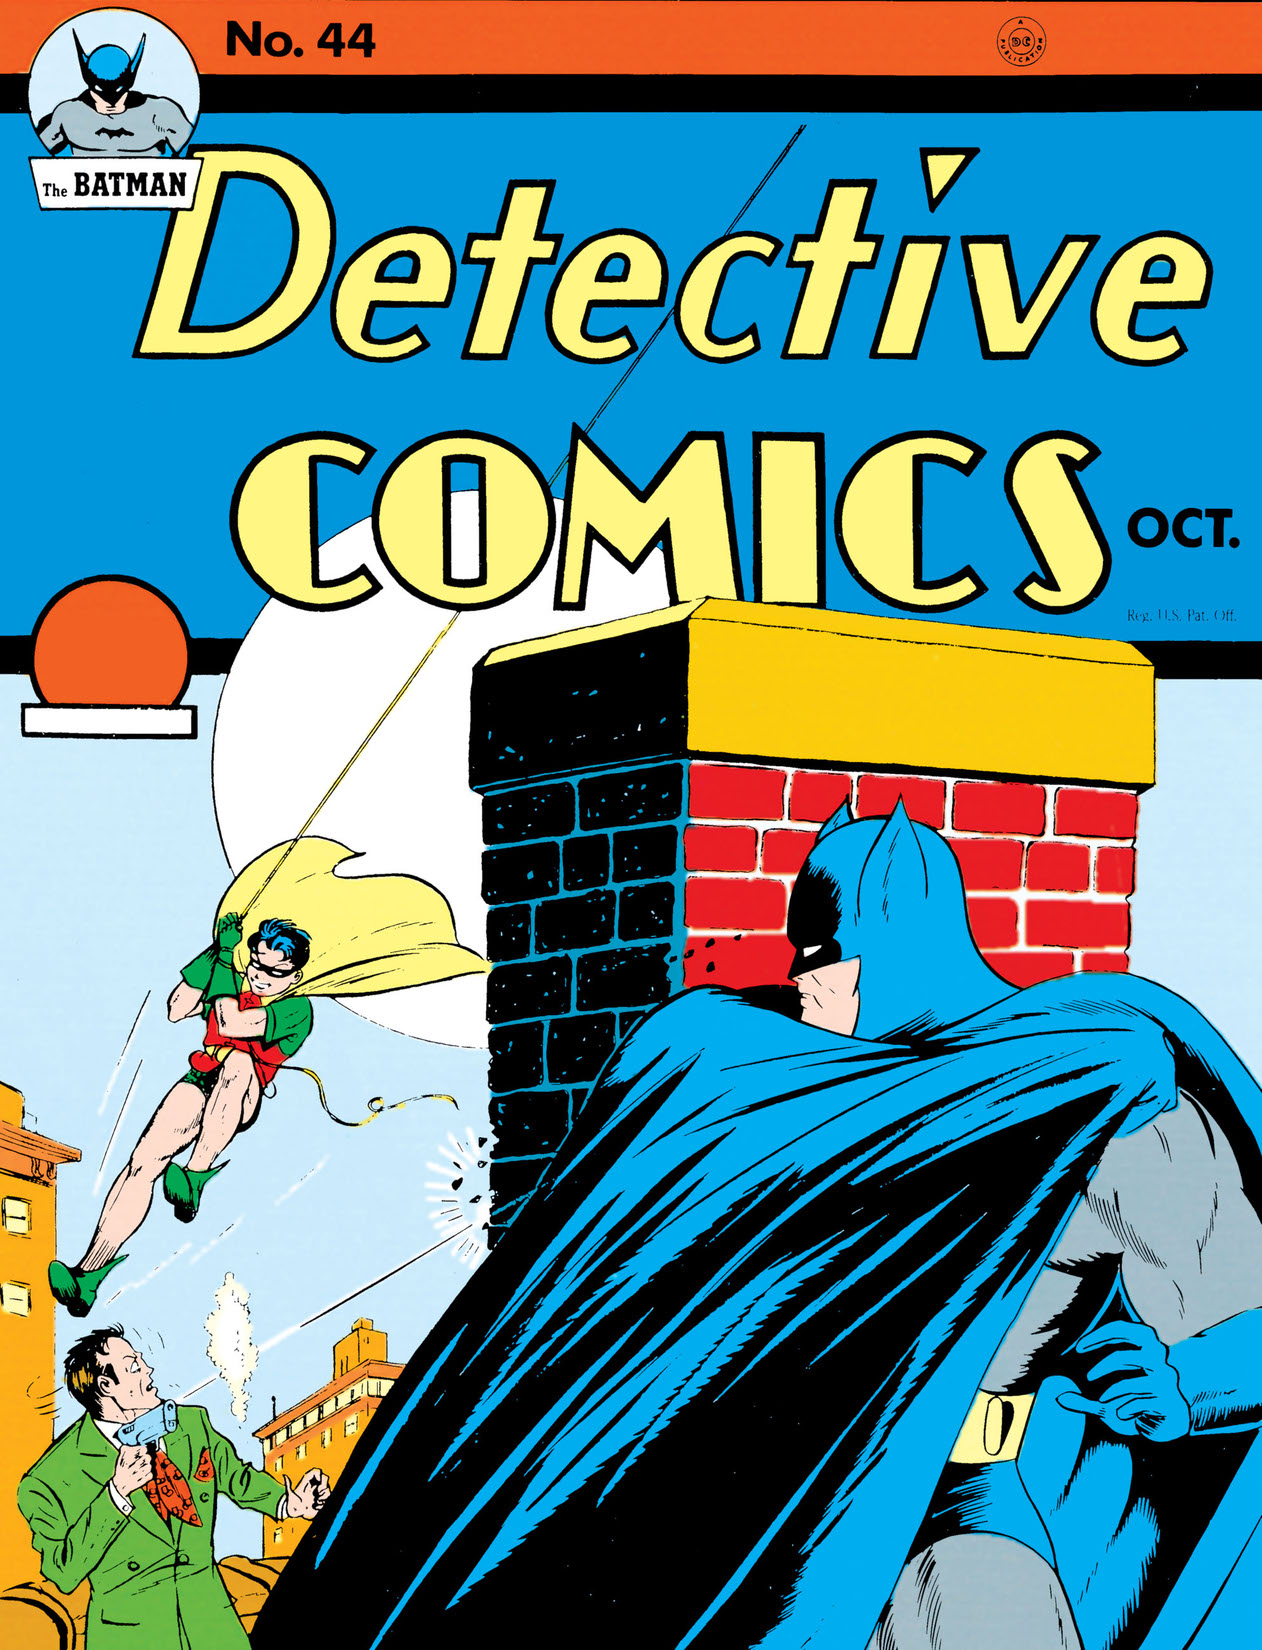 Detective Comics (1937-) #44 preview images